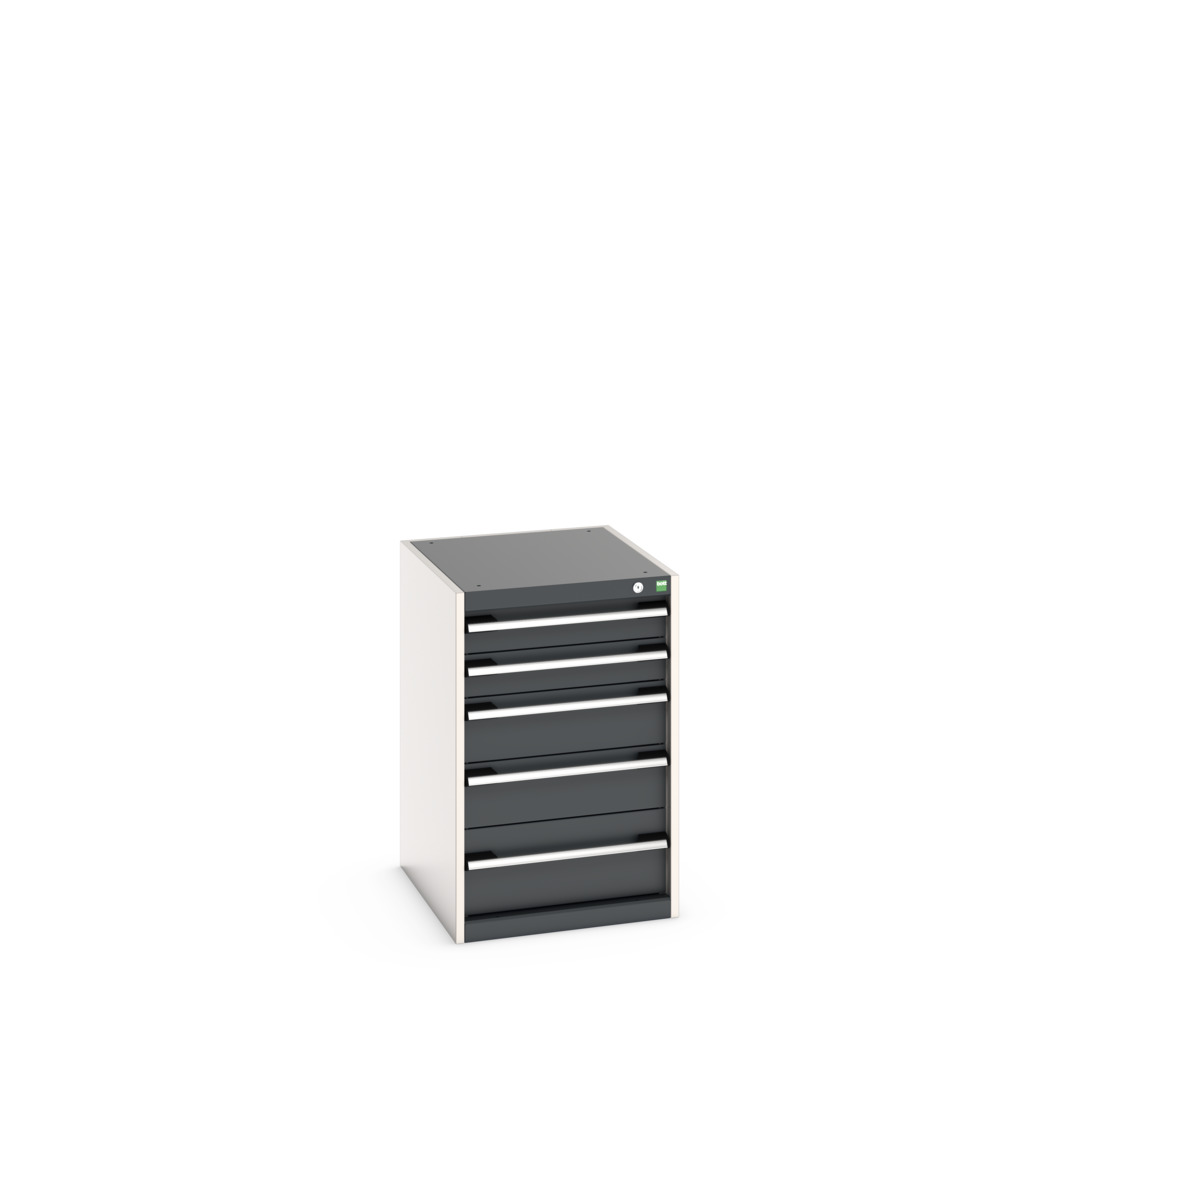 40018037. - cubio drawer cabinet